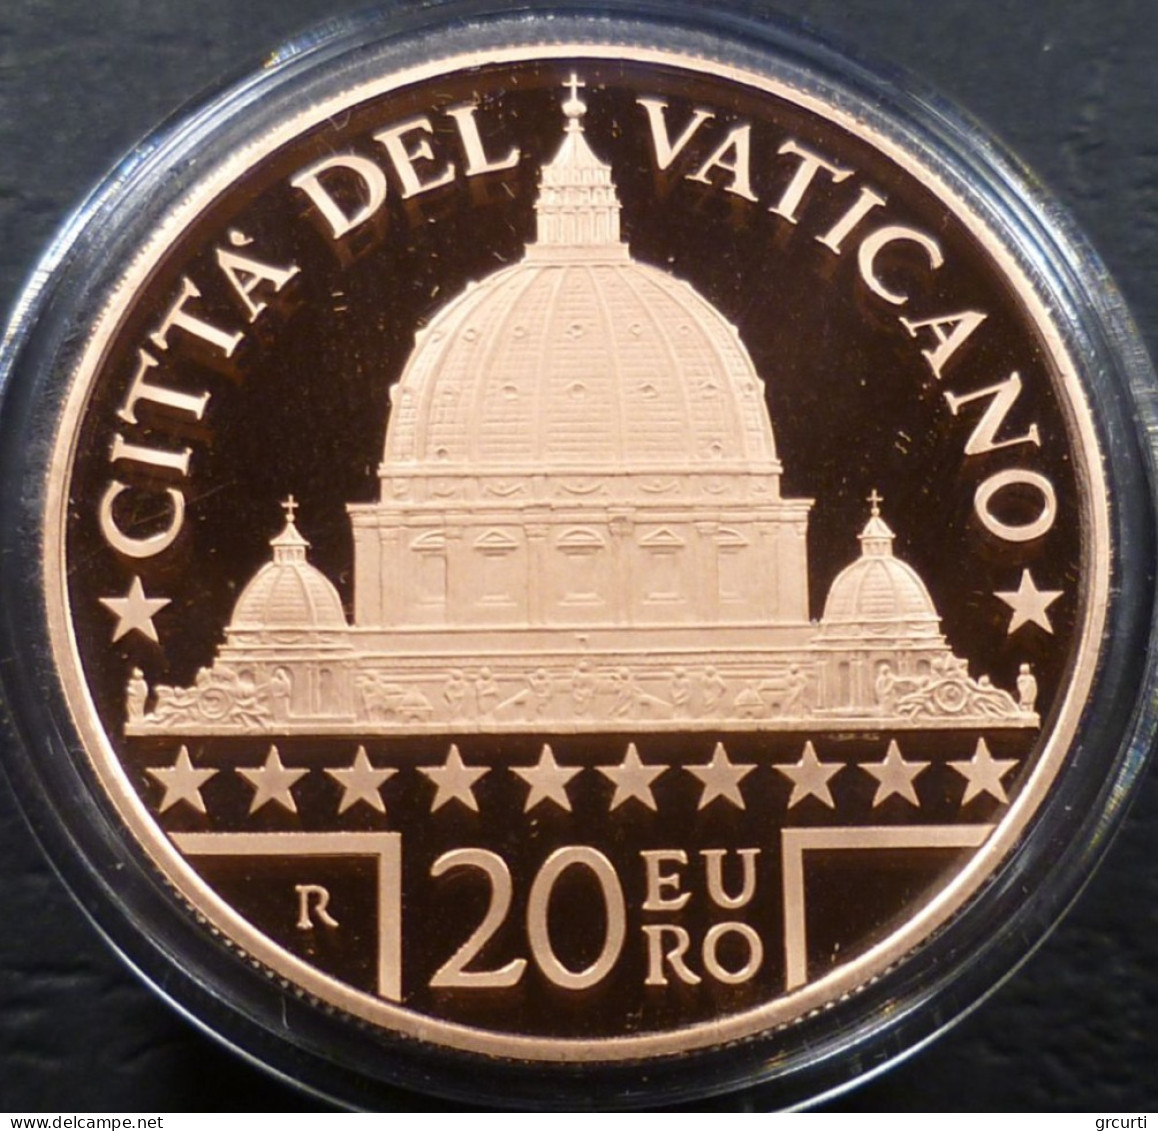 Vaticano - 20 Euro 2022 - Arte E Fede: Cupola Di San Pietro - UC# 283 - Vatican